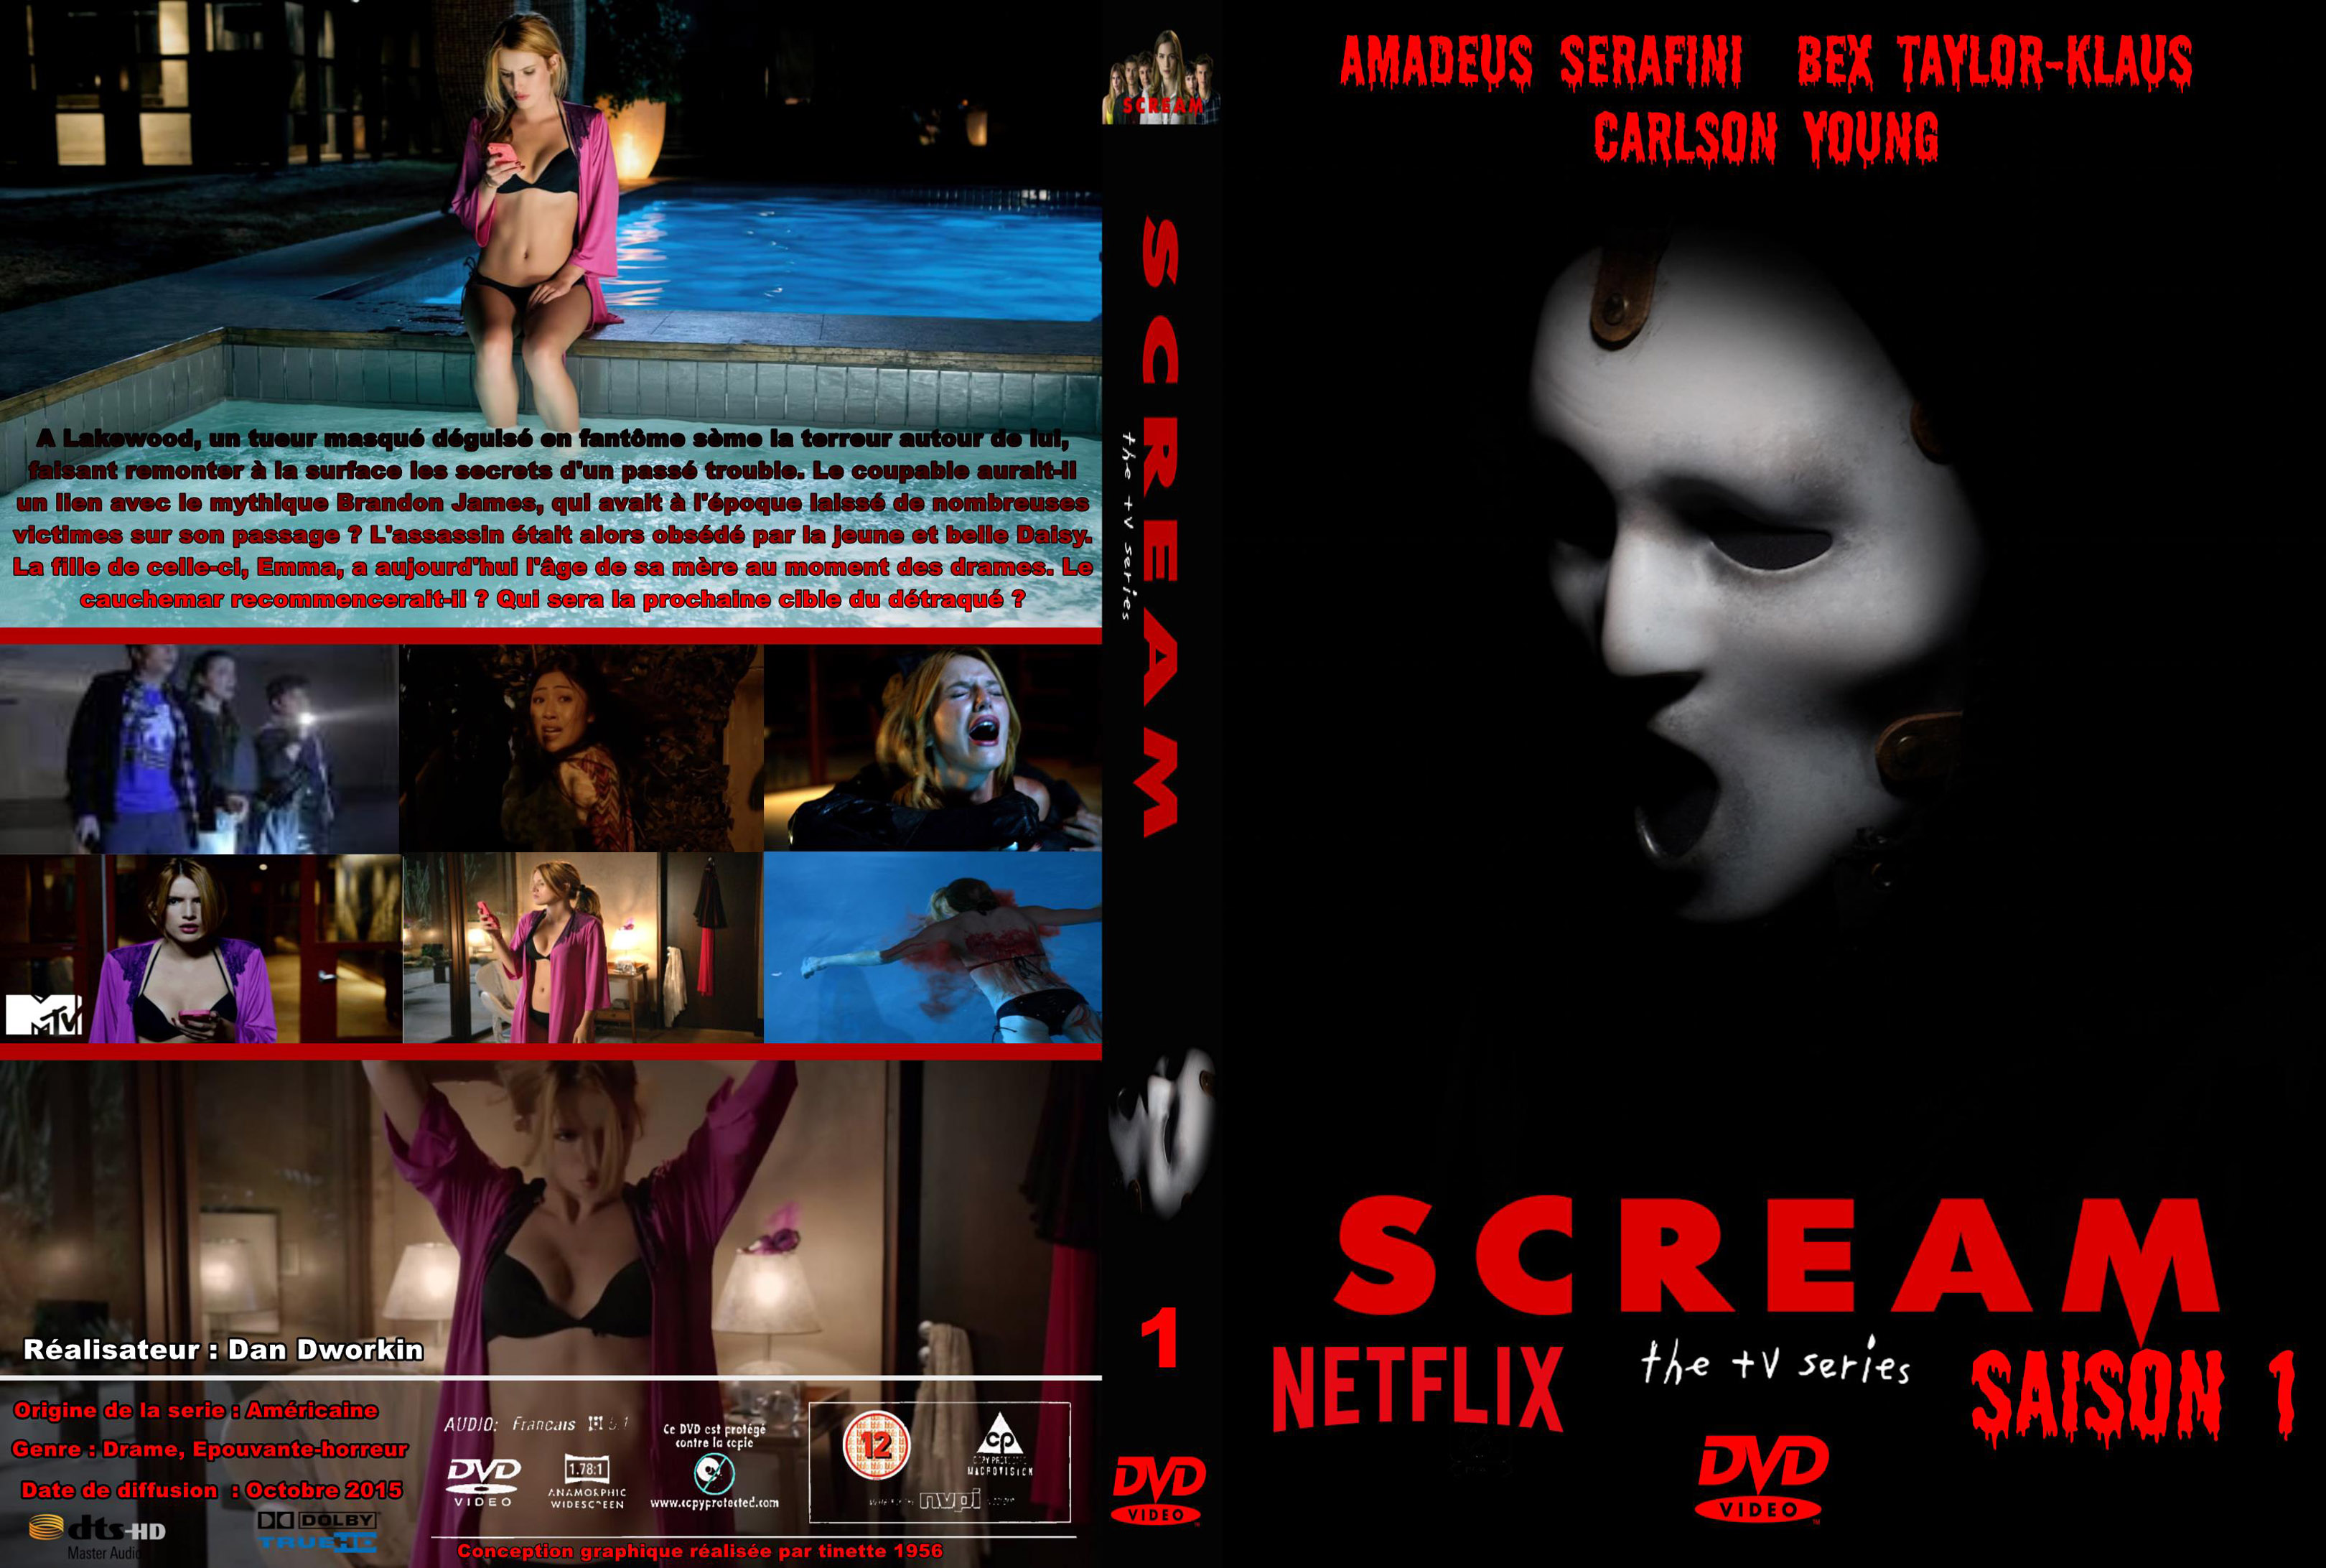 Jaquette DVD Scream saison 1 custom